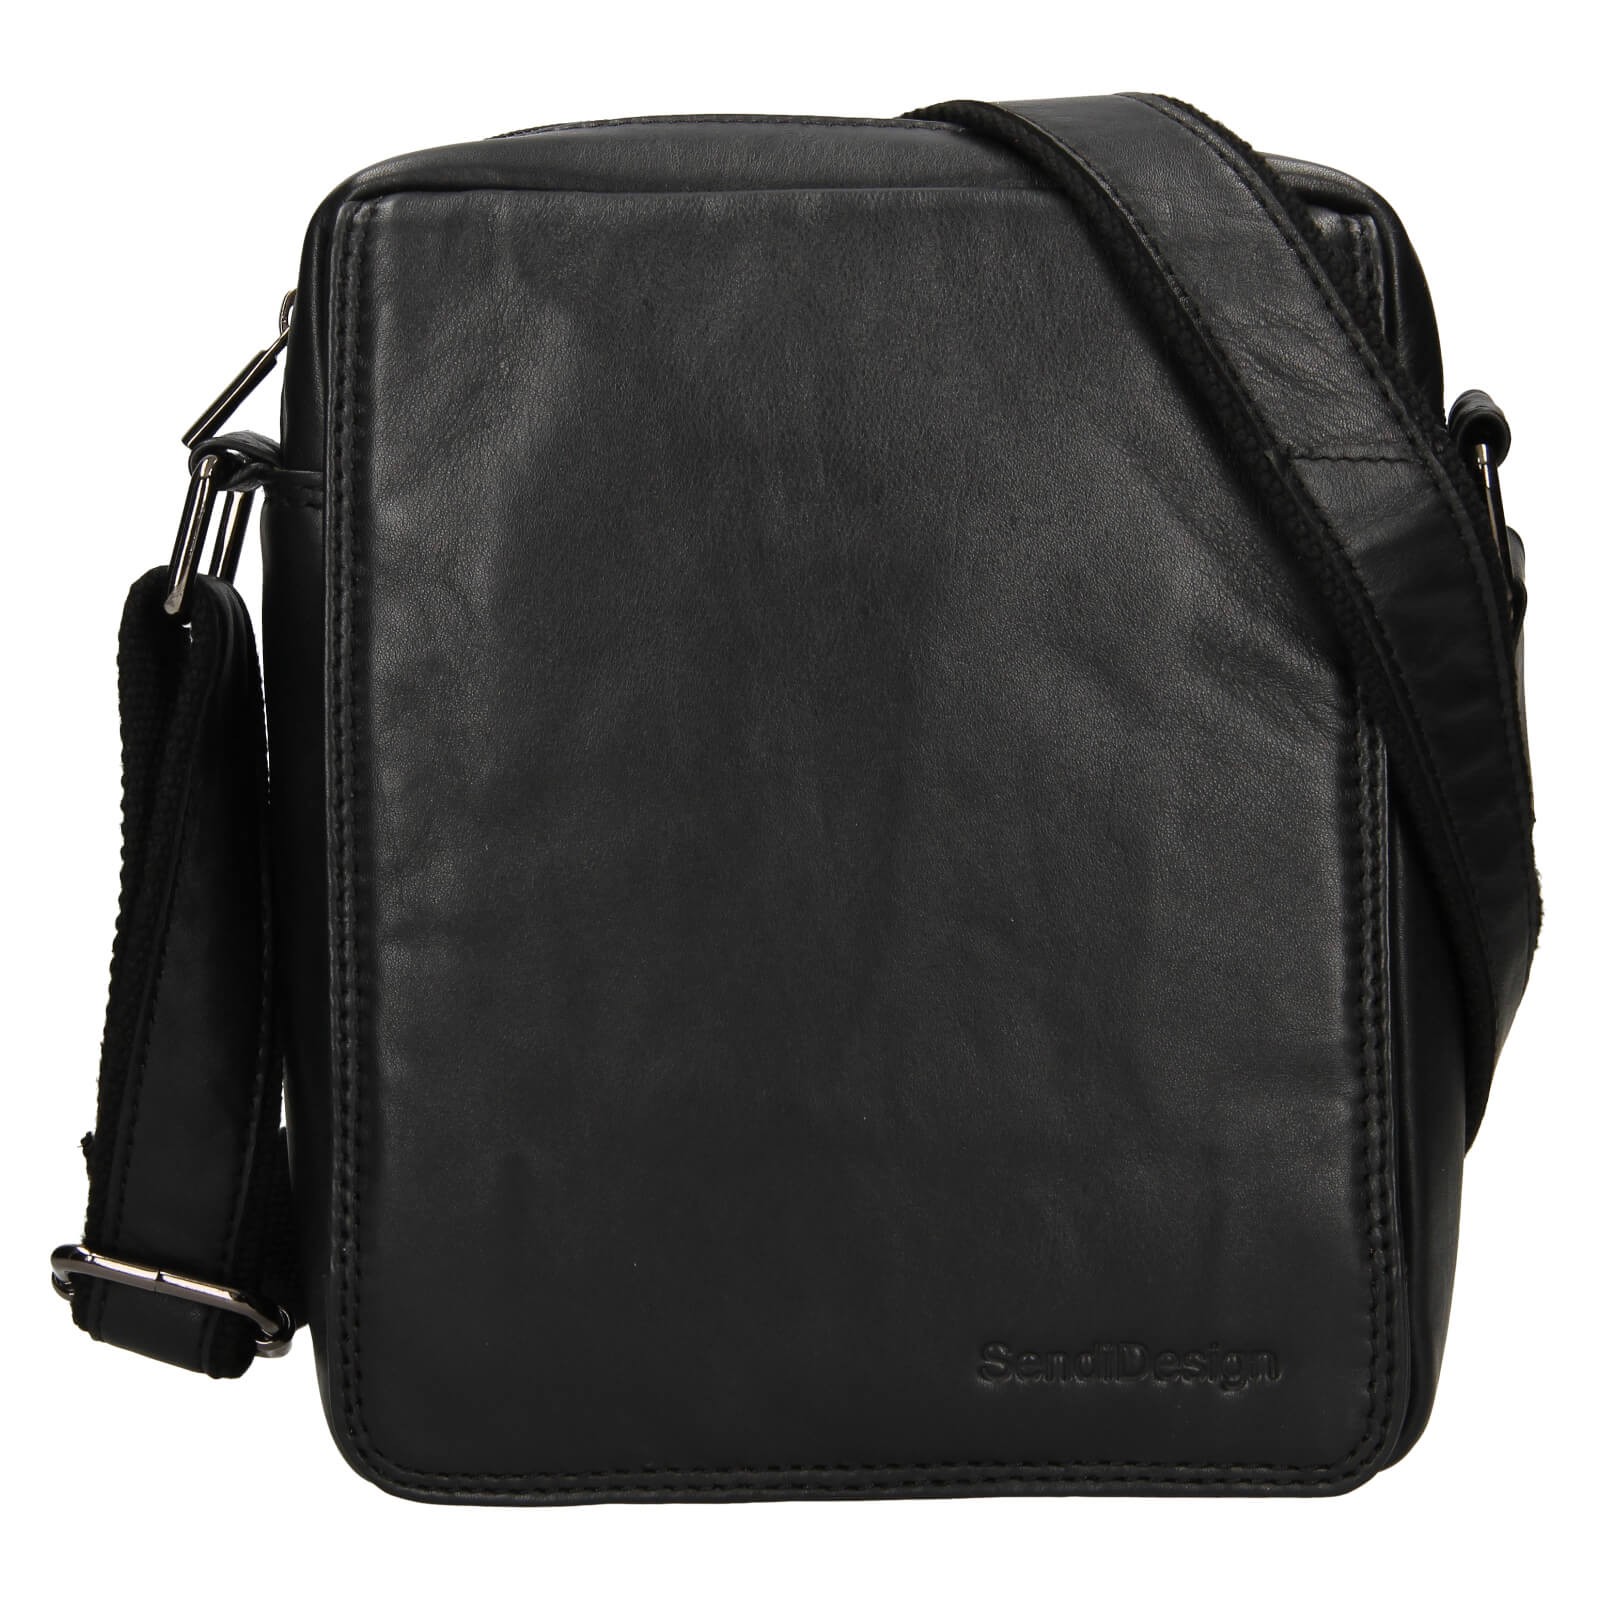 Image of Pánská kožená taška přes rameno SendiDesign Trinte - černá CZ